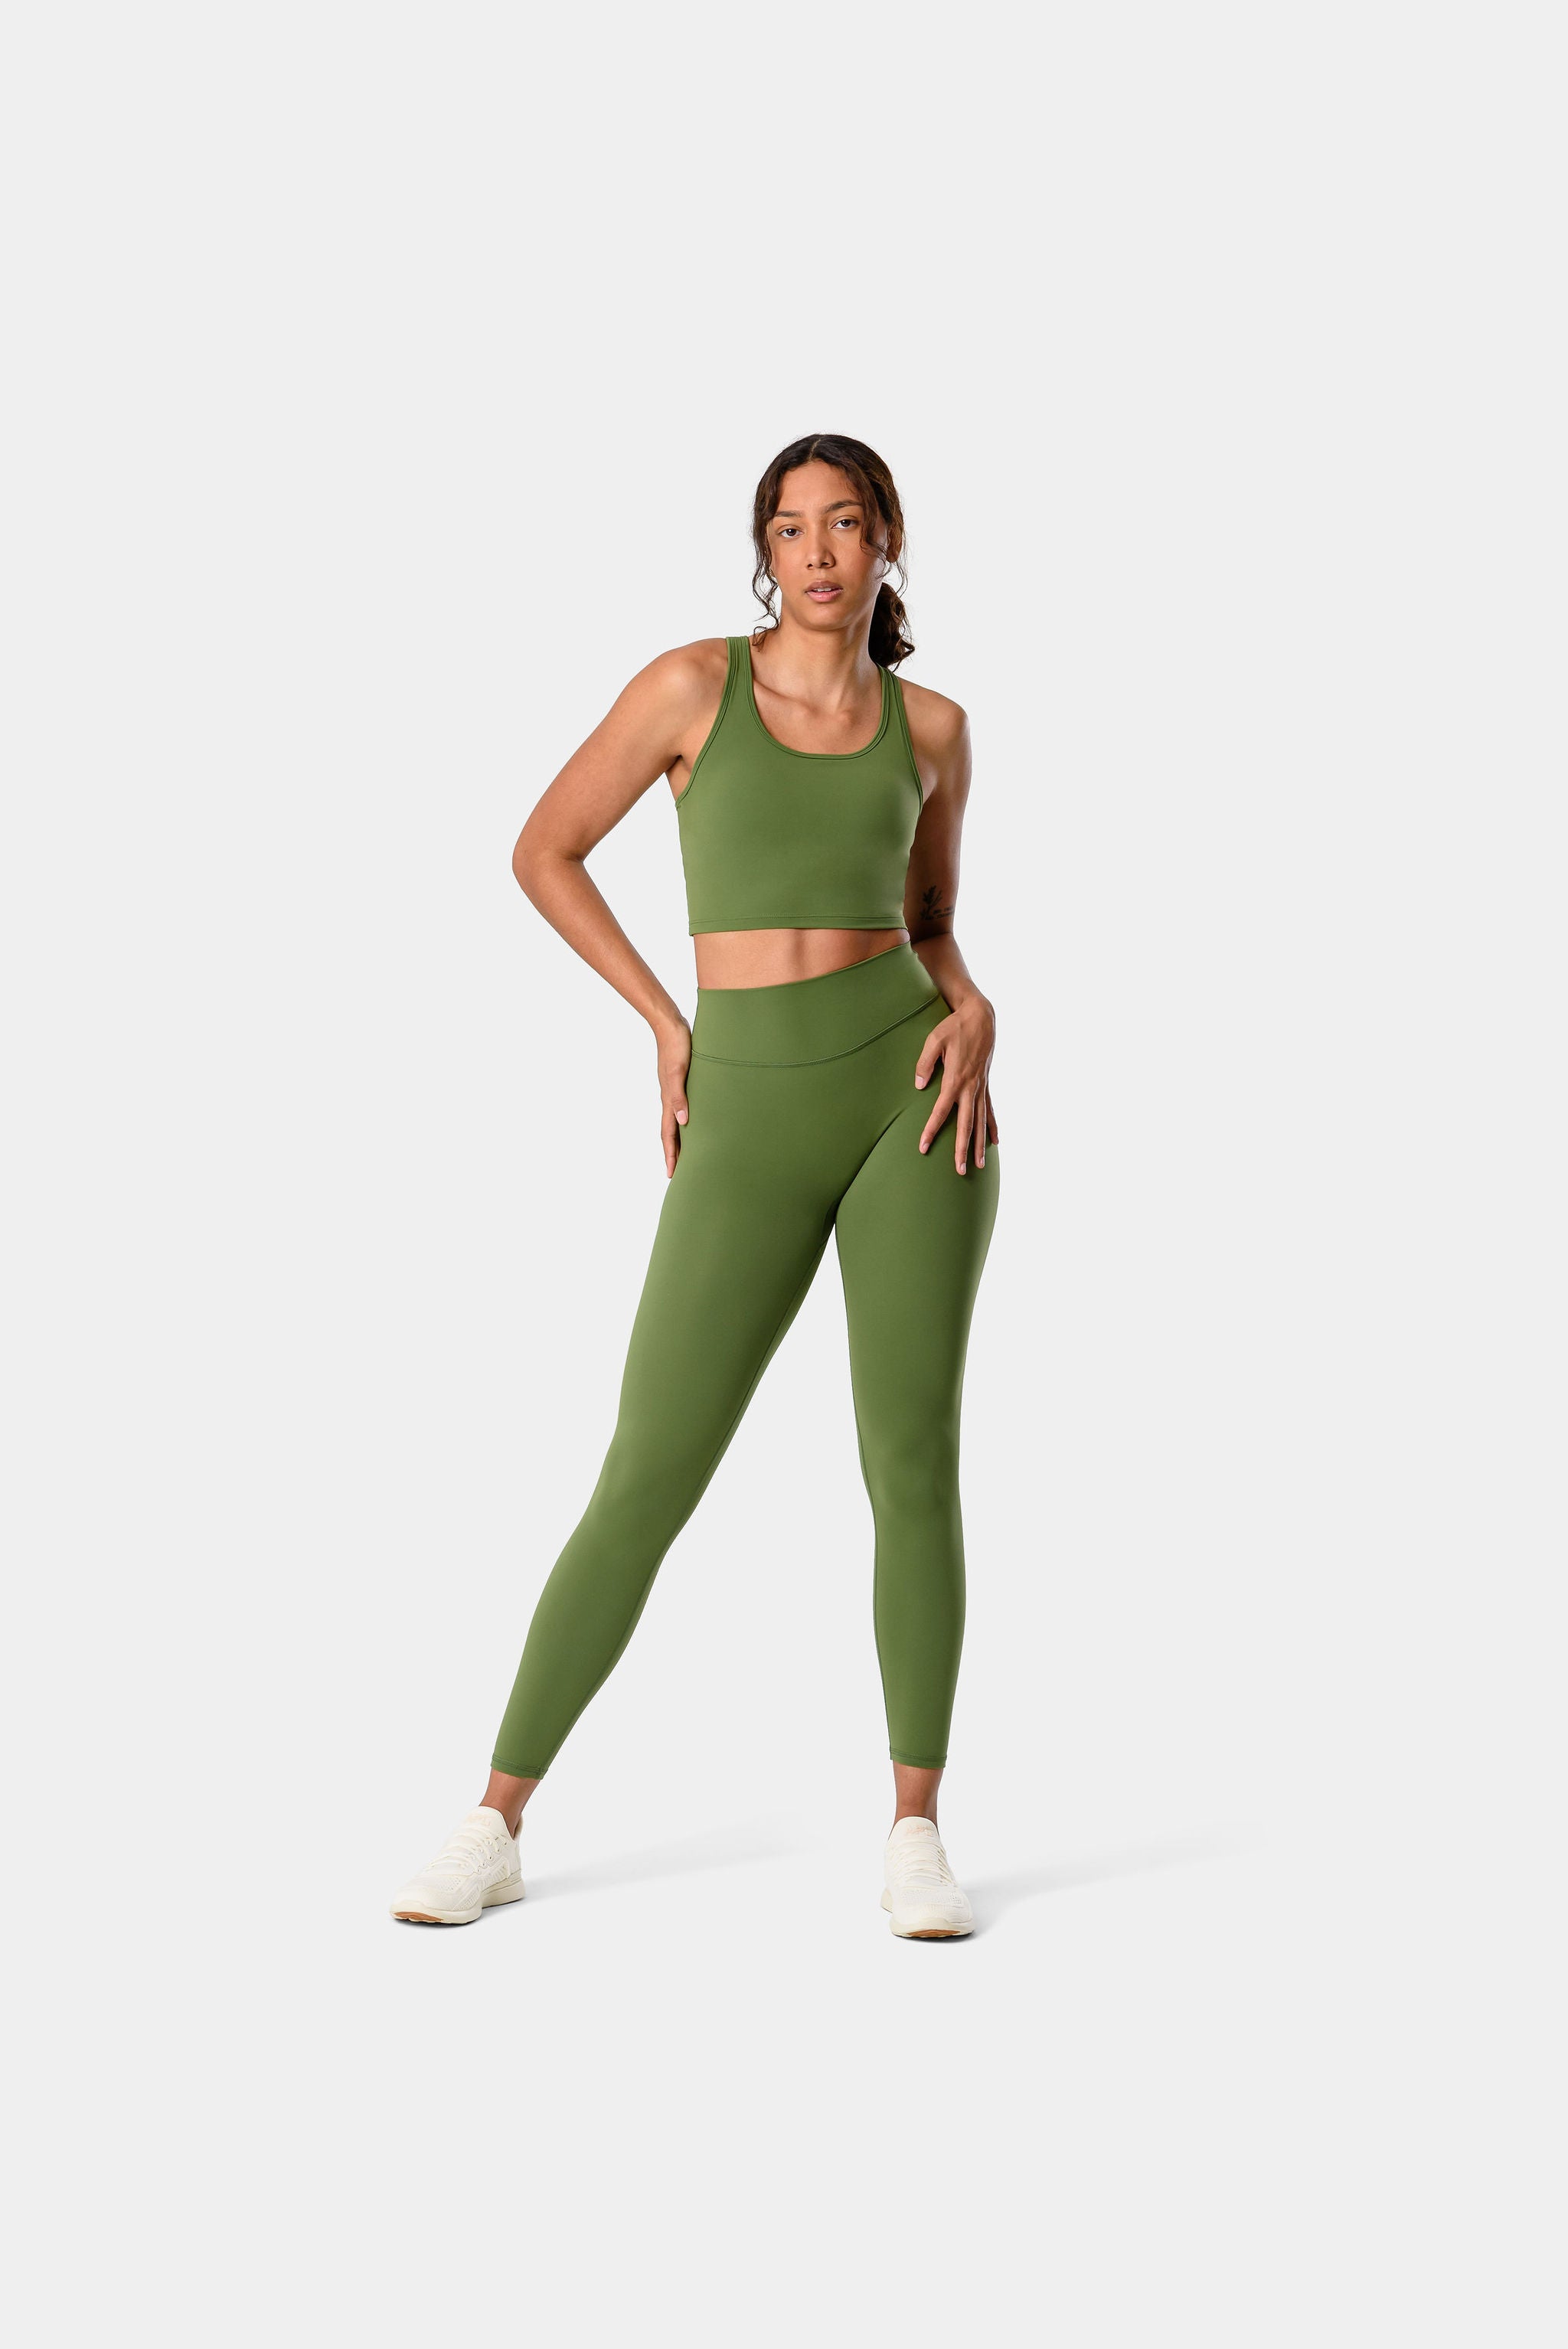 Serenity Leggings 25 - Jade Green – Kamo Fitness